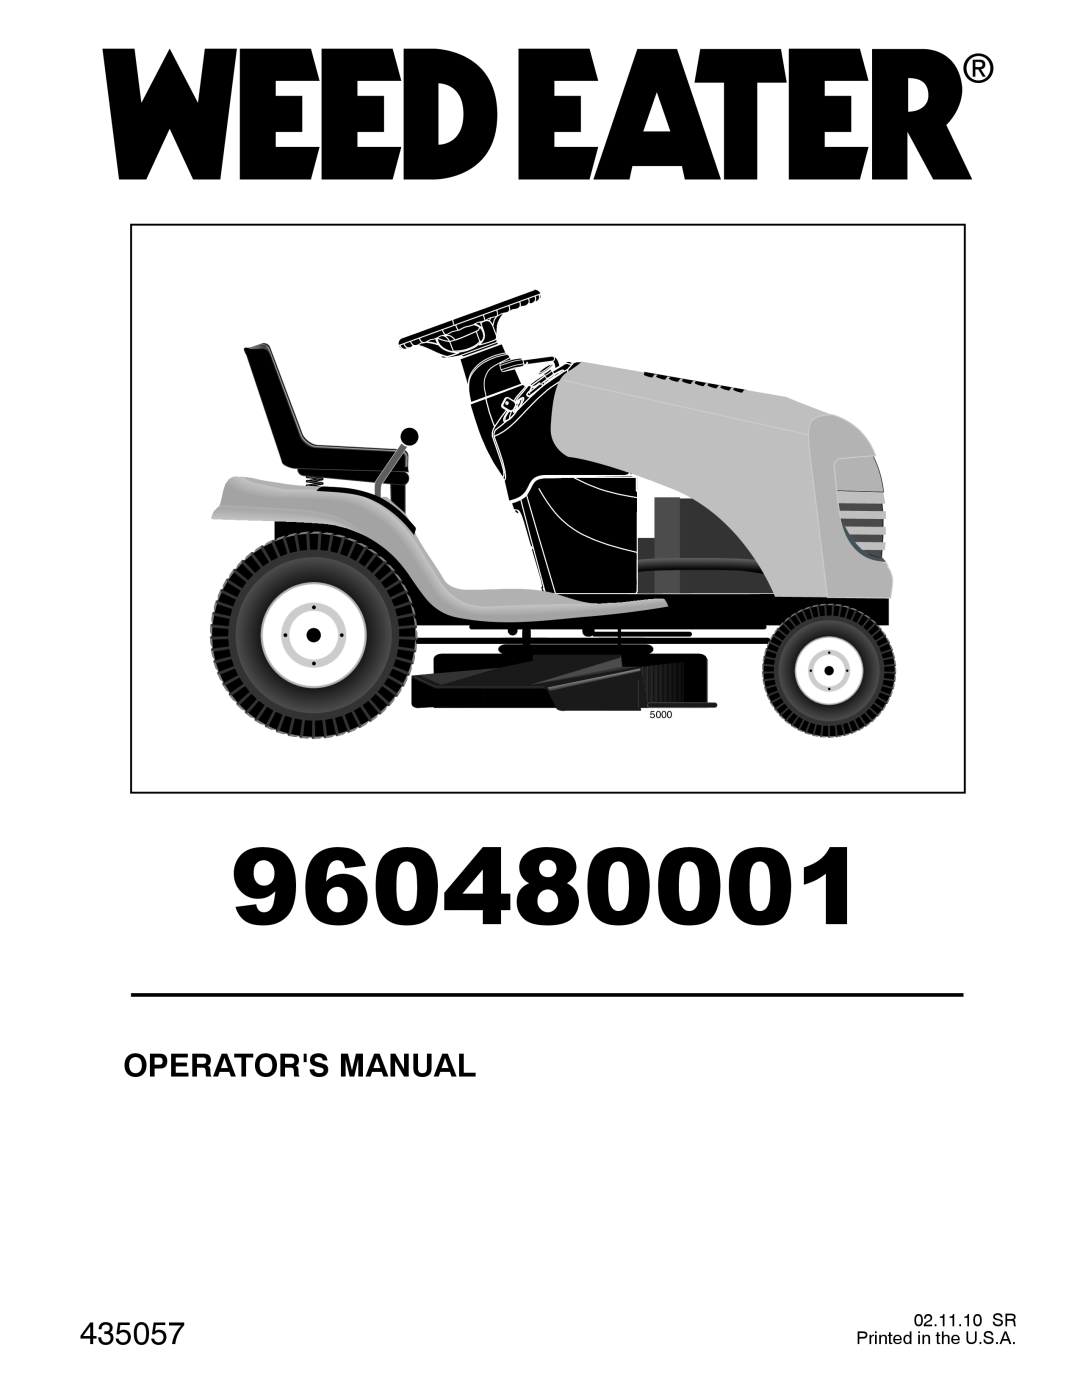 Weed Eater 96048000100 manual Operators Manual, 435057, 02.11.10 SR, Printed in the U.S.A, 5000 